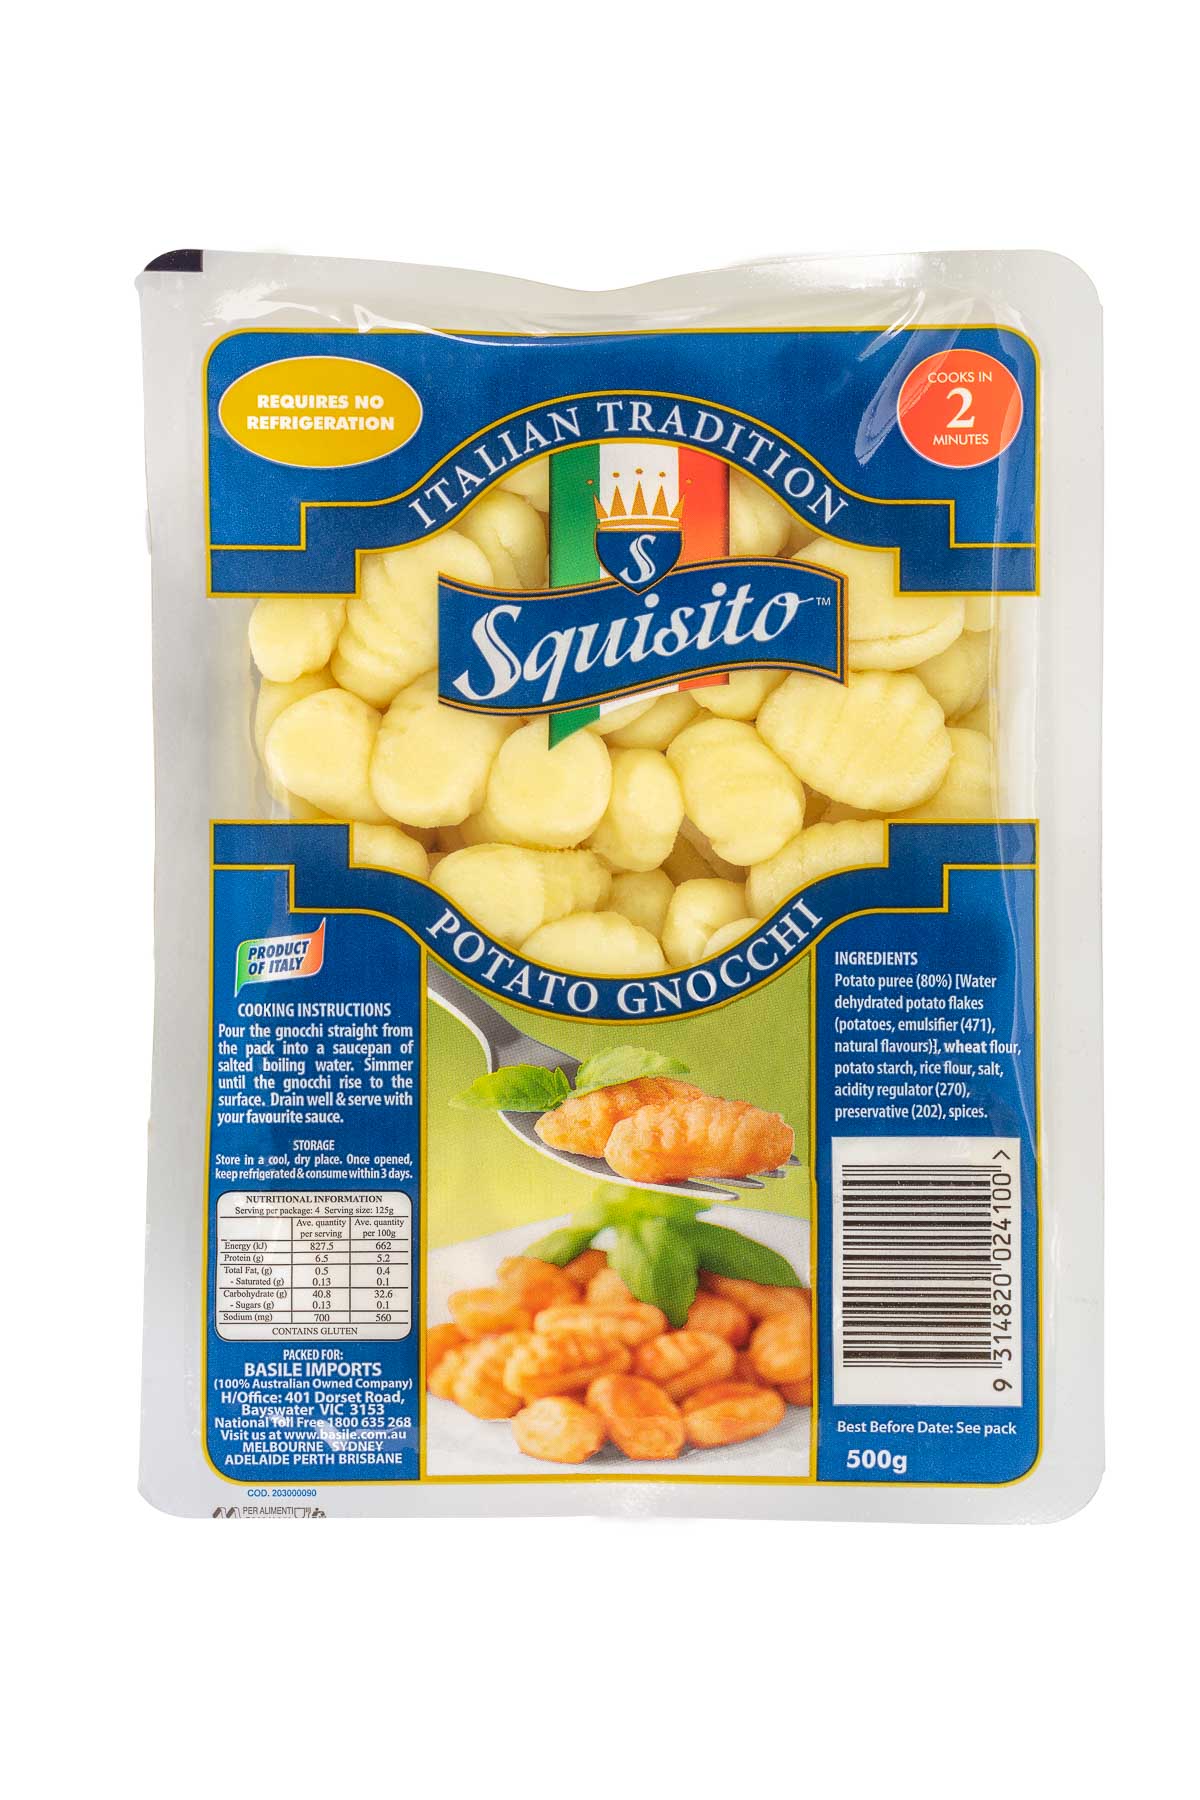 Potato Gnocchi - Product Photography sample